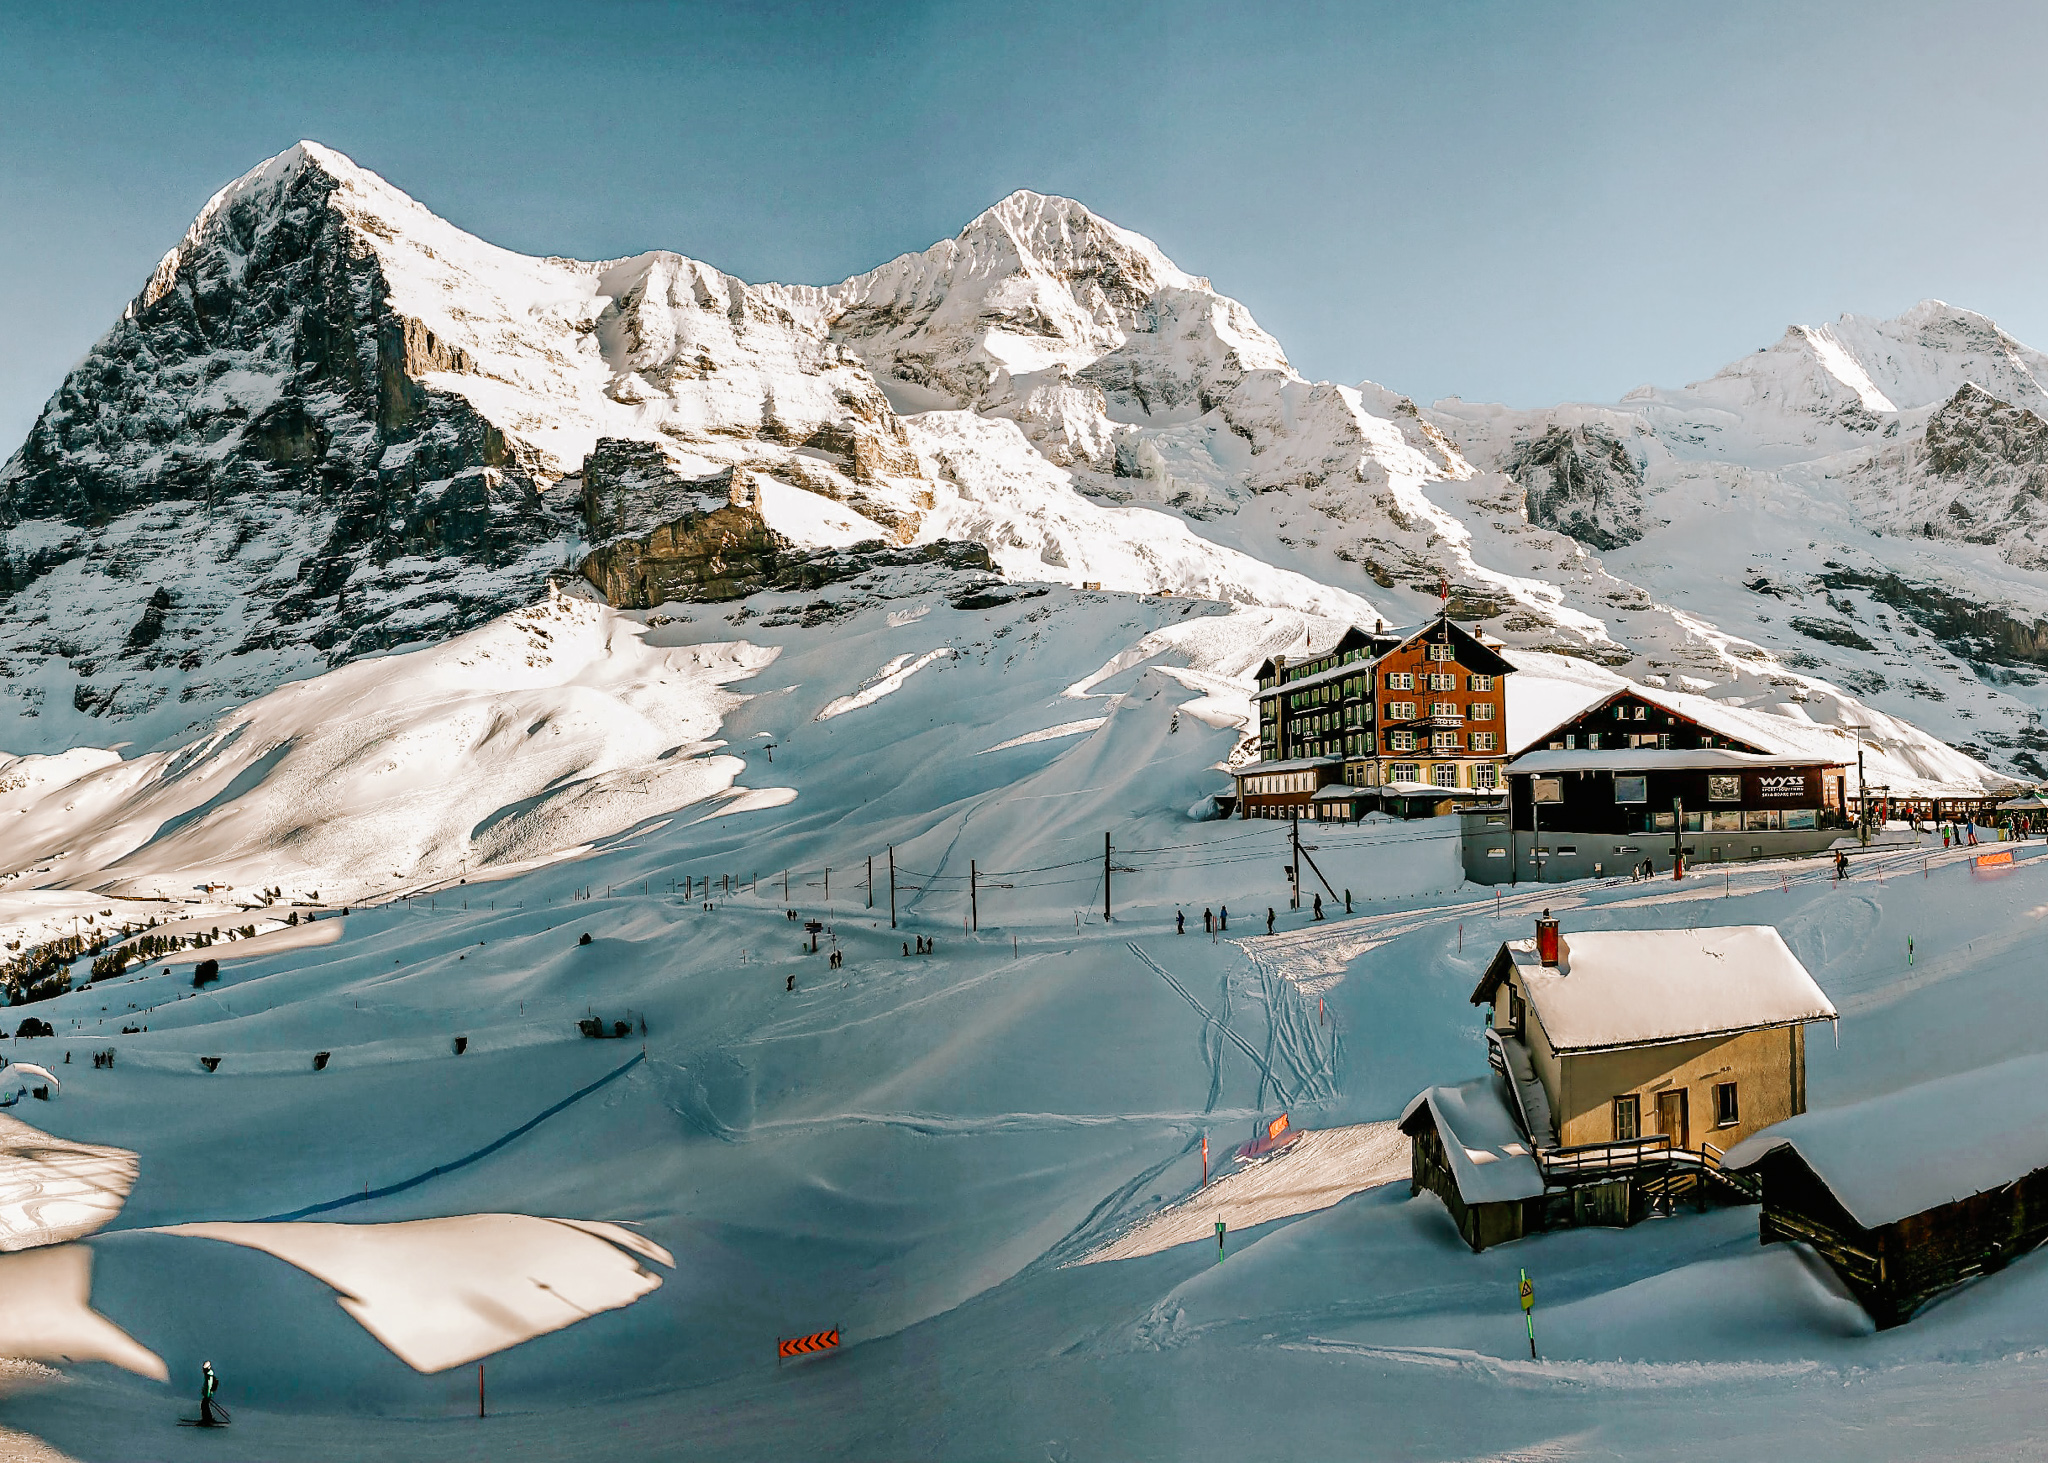 A high altitude Swiss ski resort near Lauterbrunnen in winter, with lots of snowand people snowboarding.